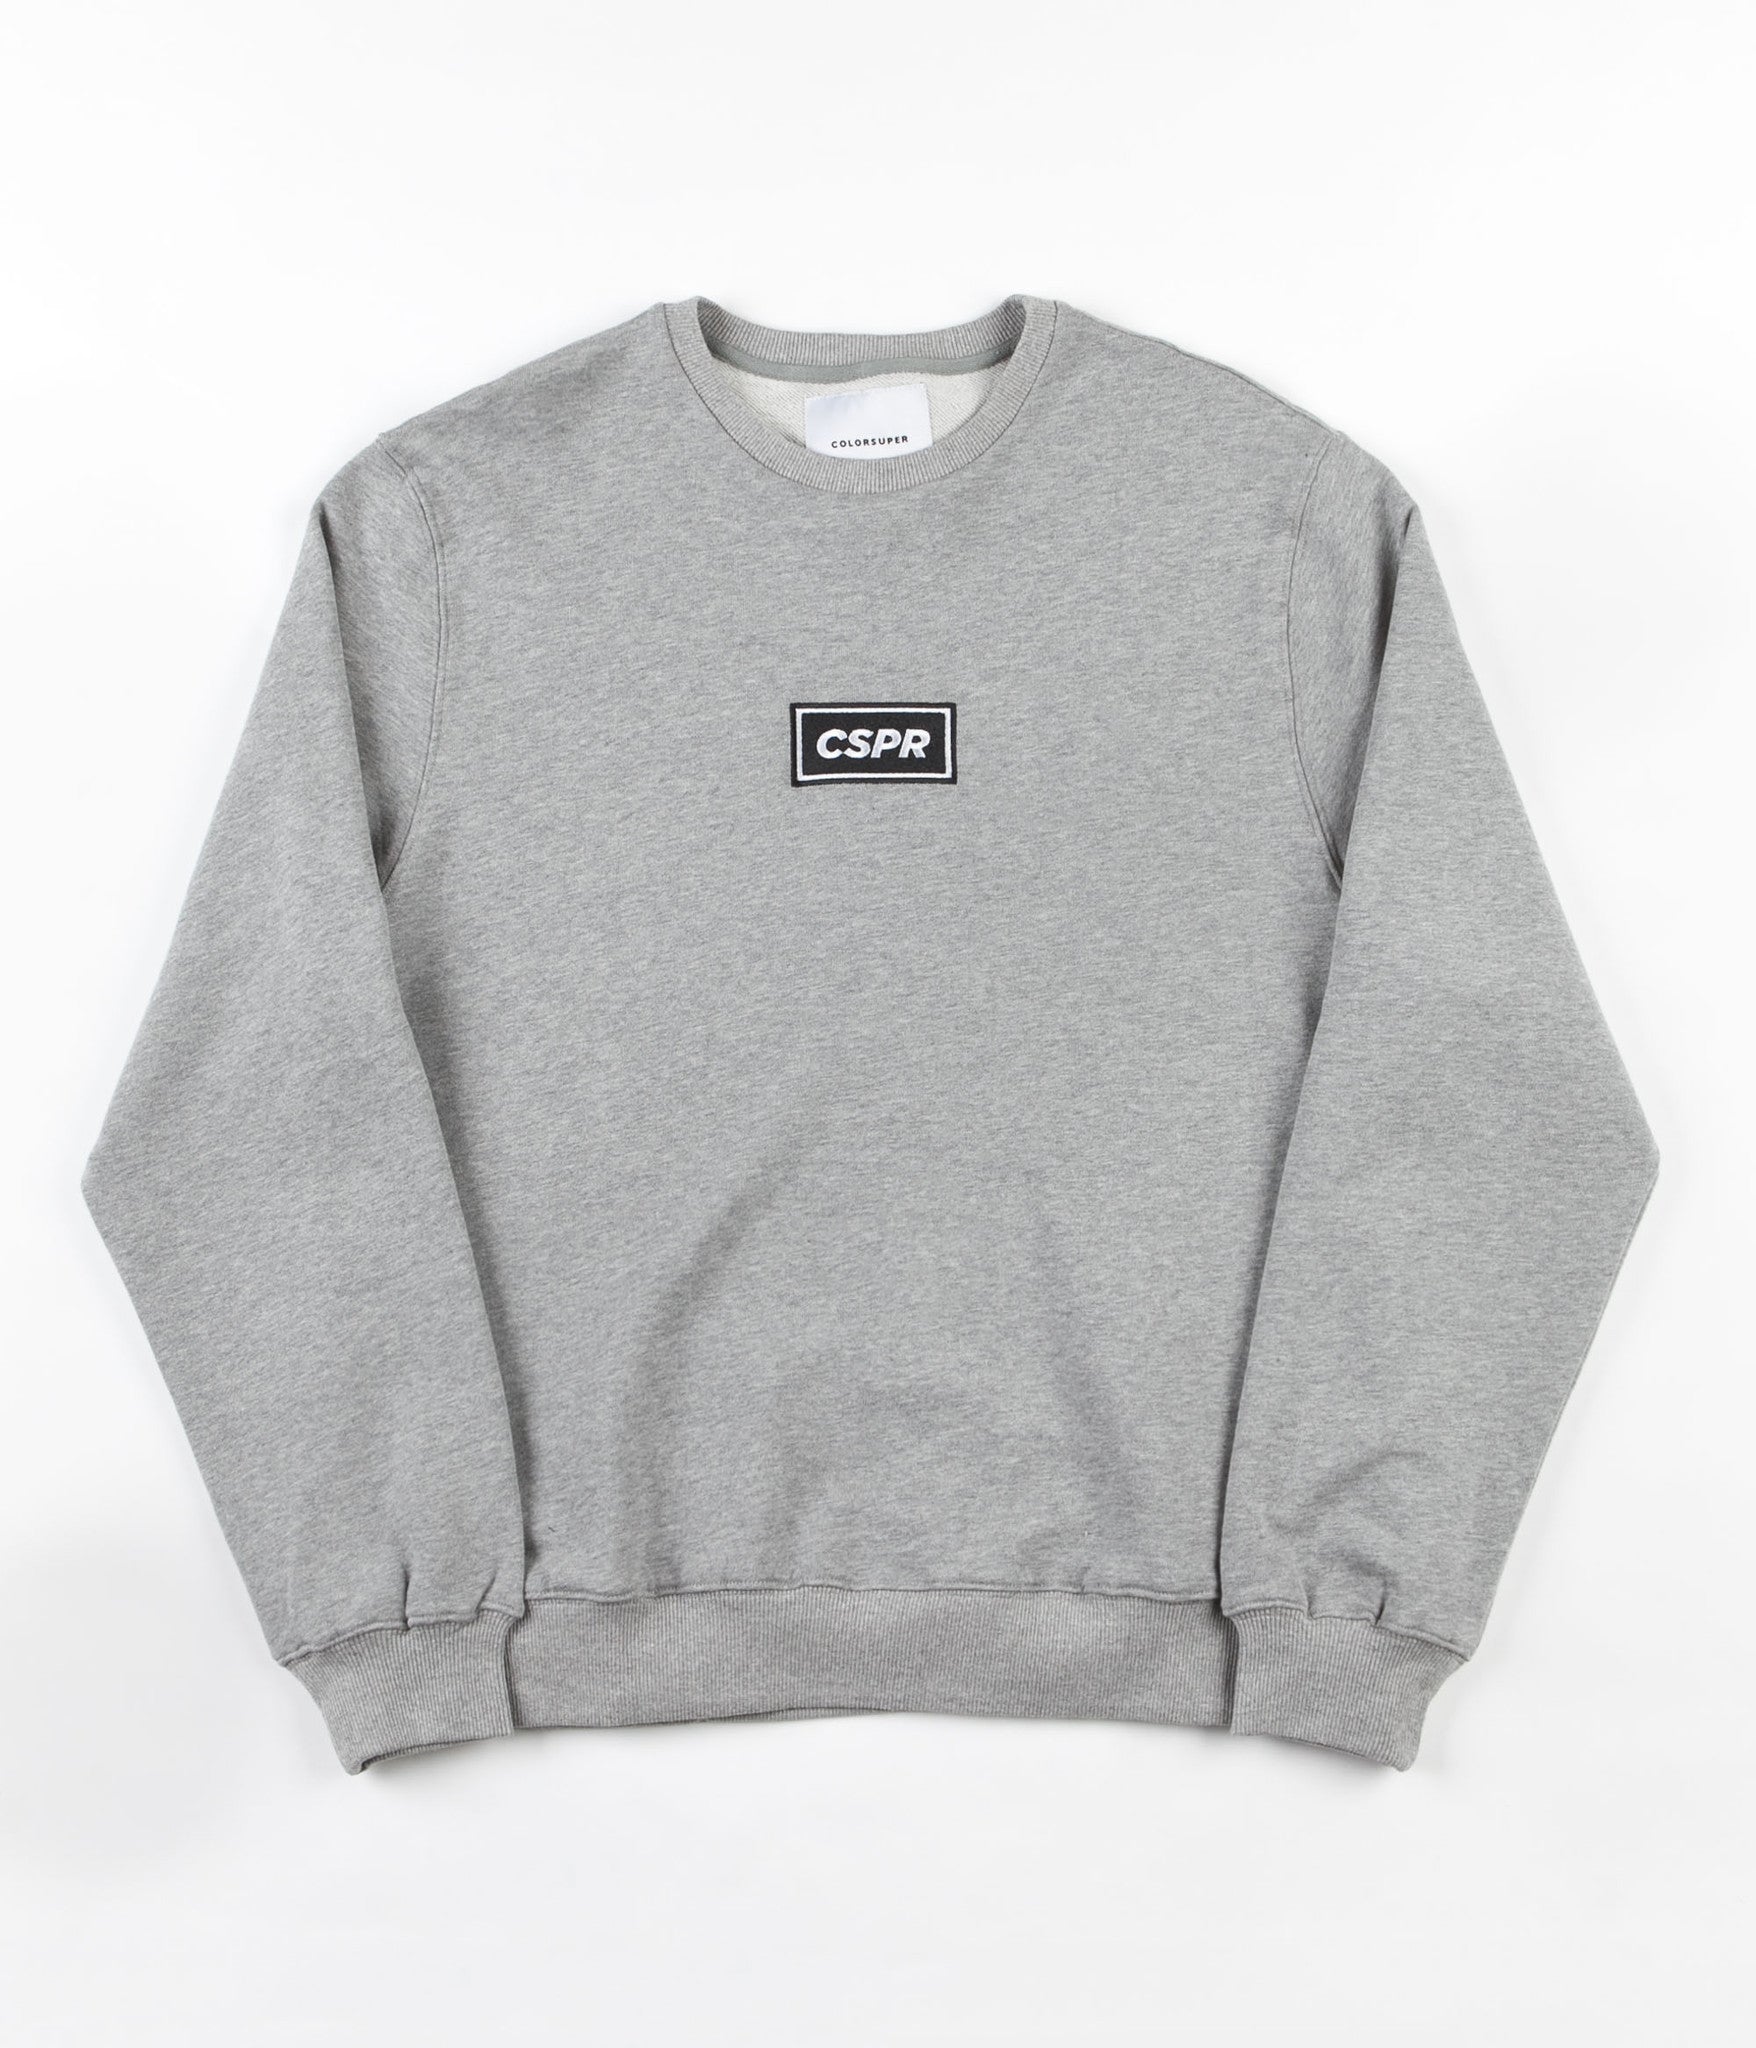 Colorsuper CSPR Embroidery Crewneck Sweatshirt - Grey / Black | Flatspot